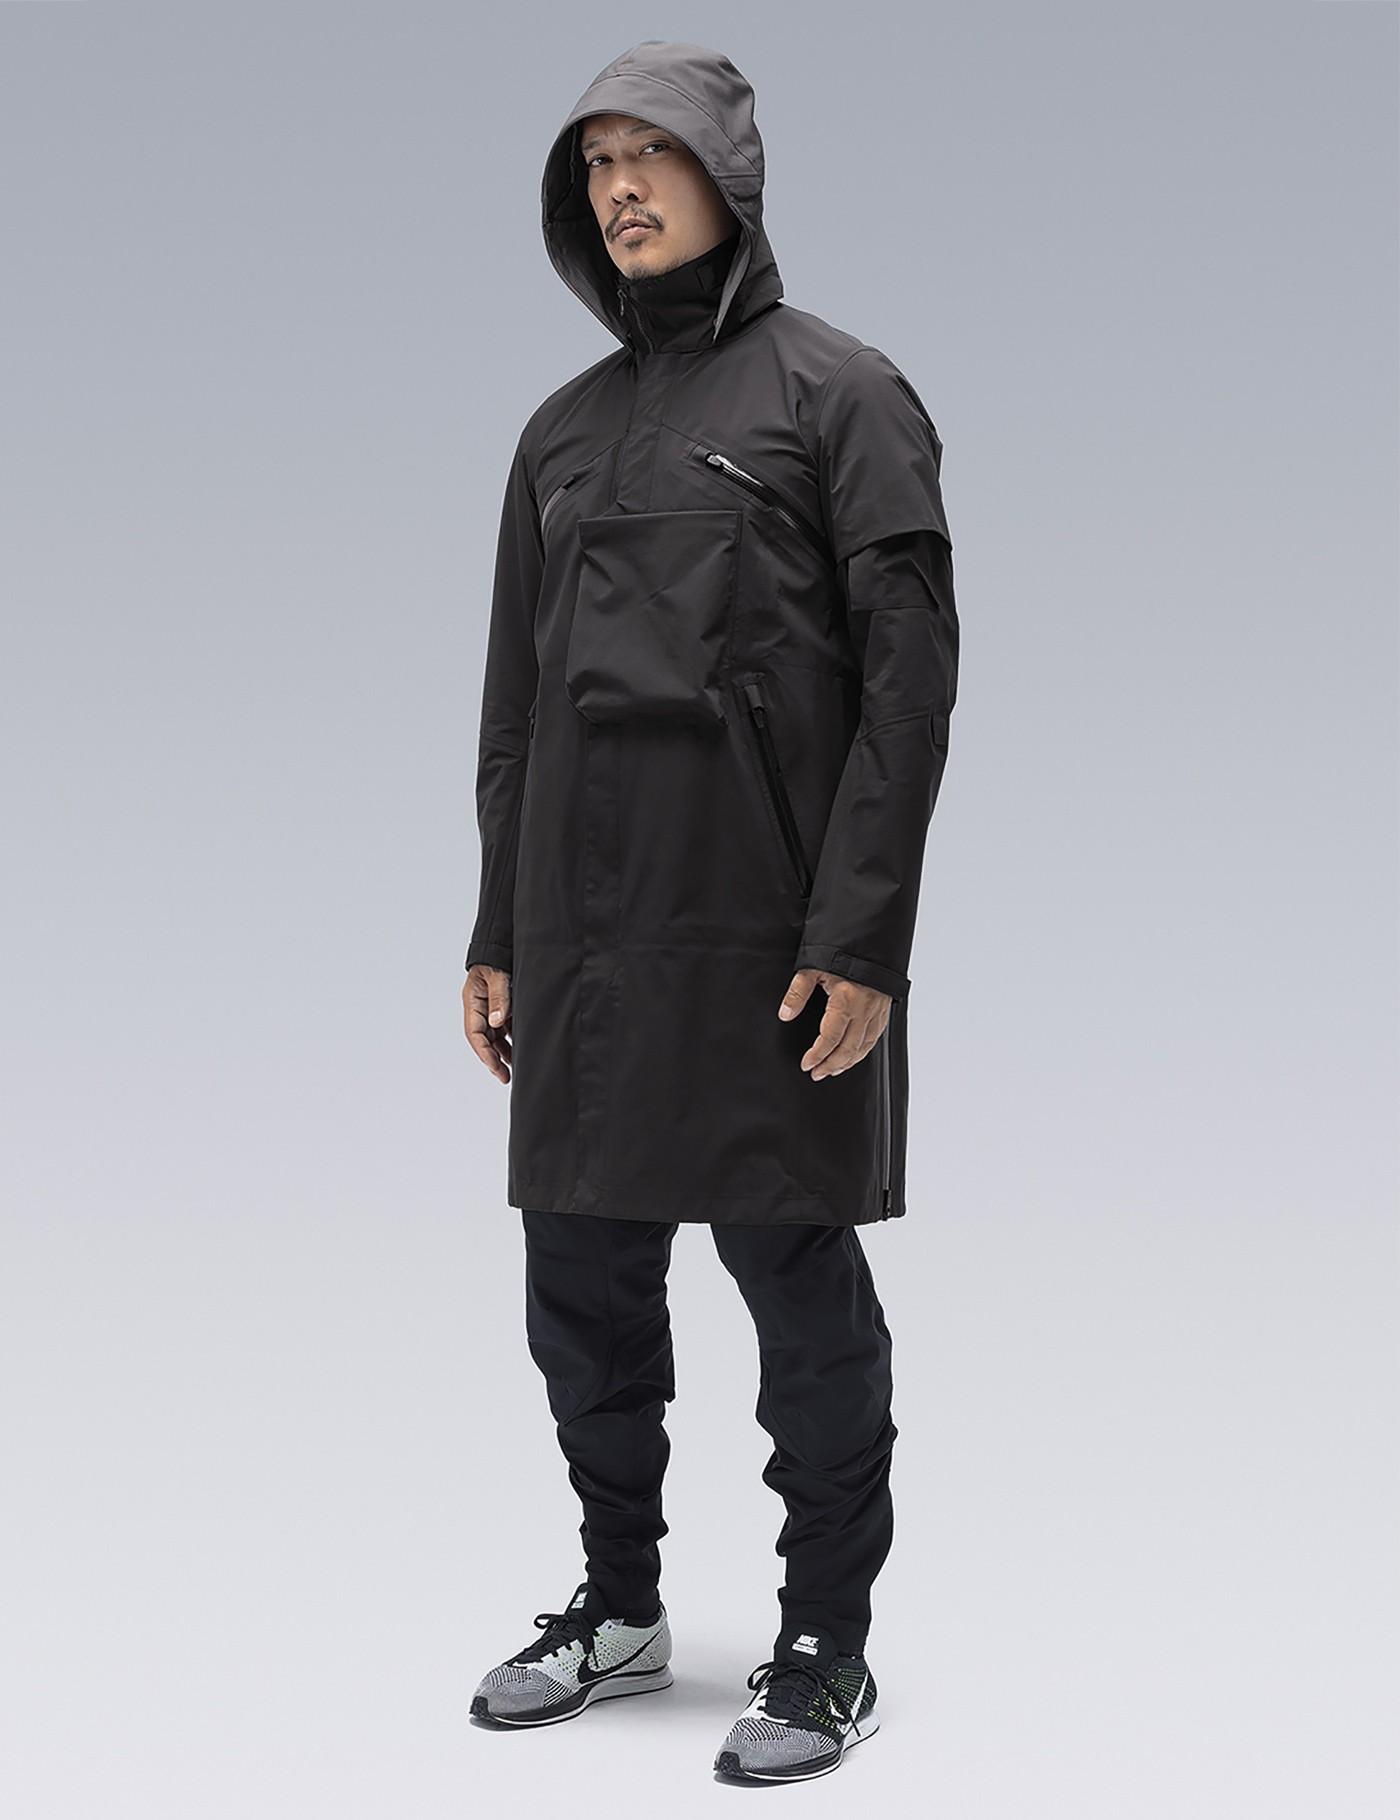 ACRONYM J1l-gt 3l Gore-tex Pro Interops Jacket in Black for Men - Lyst